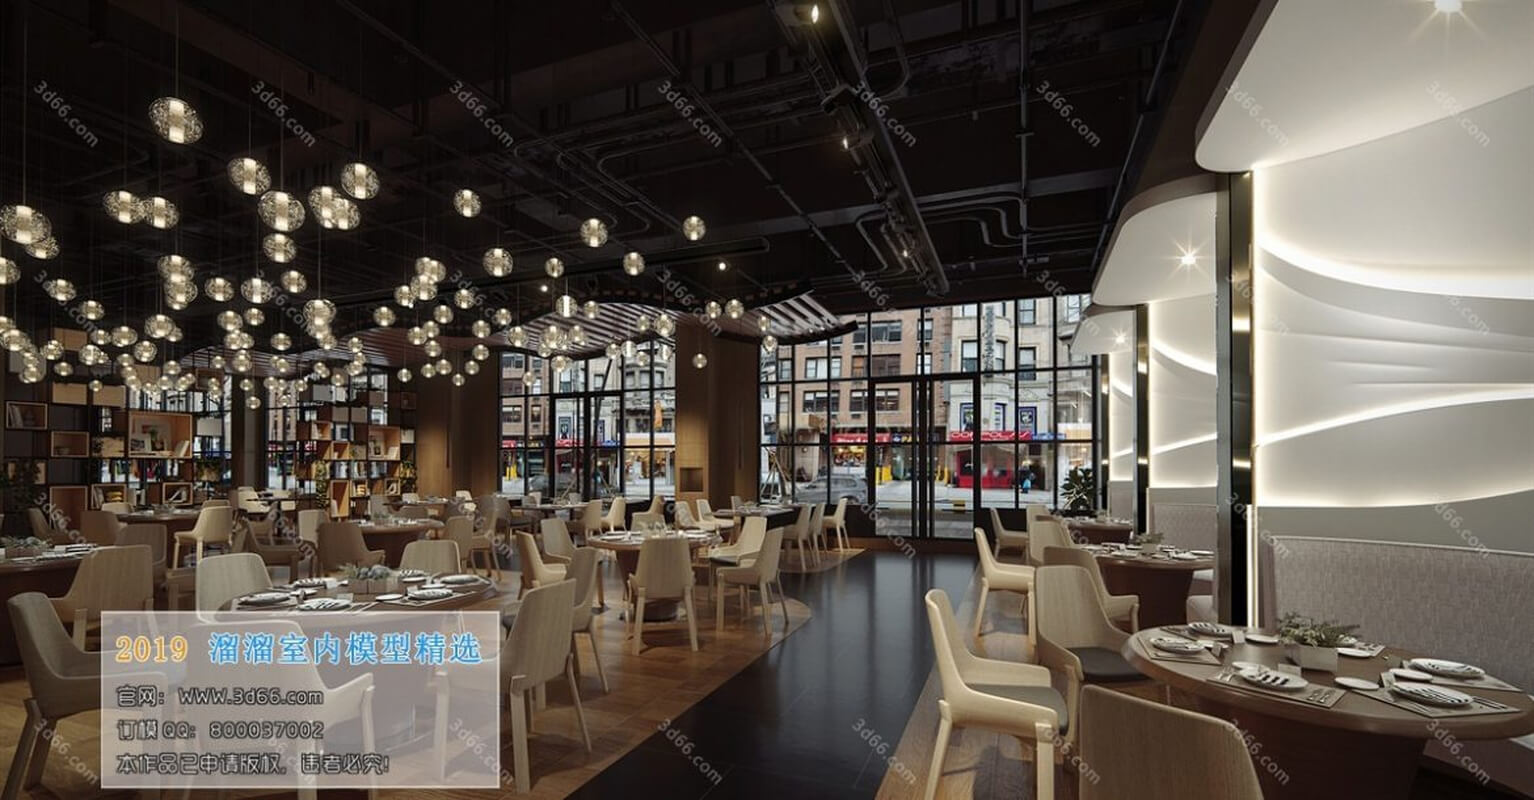 3D66 Hotel & Teahouse & Cafe Interior 2019 Style (02)